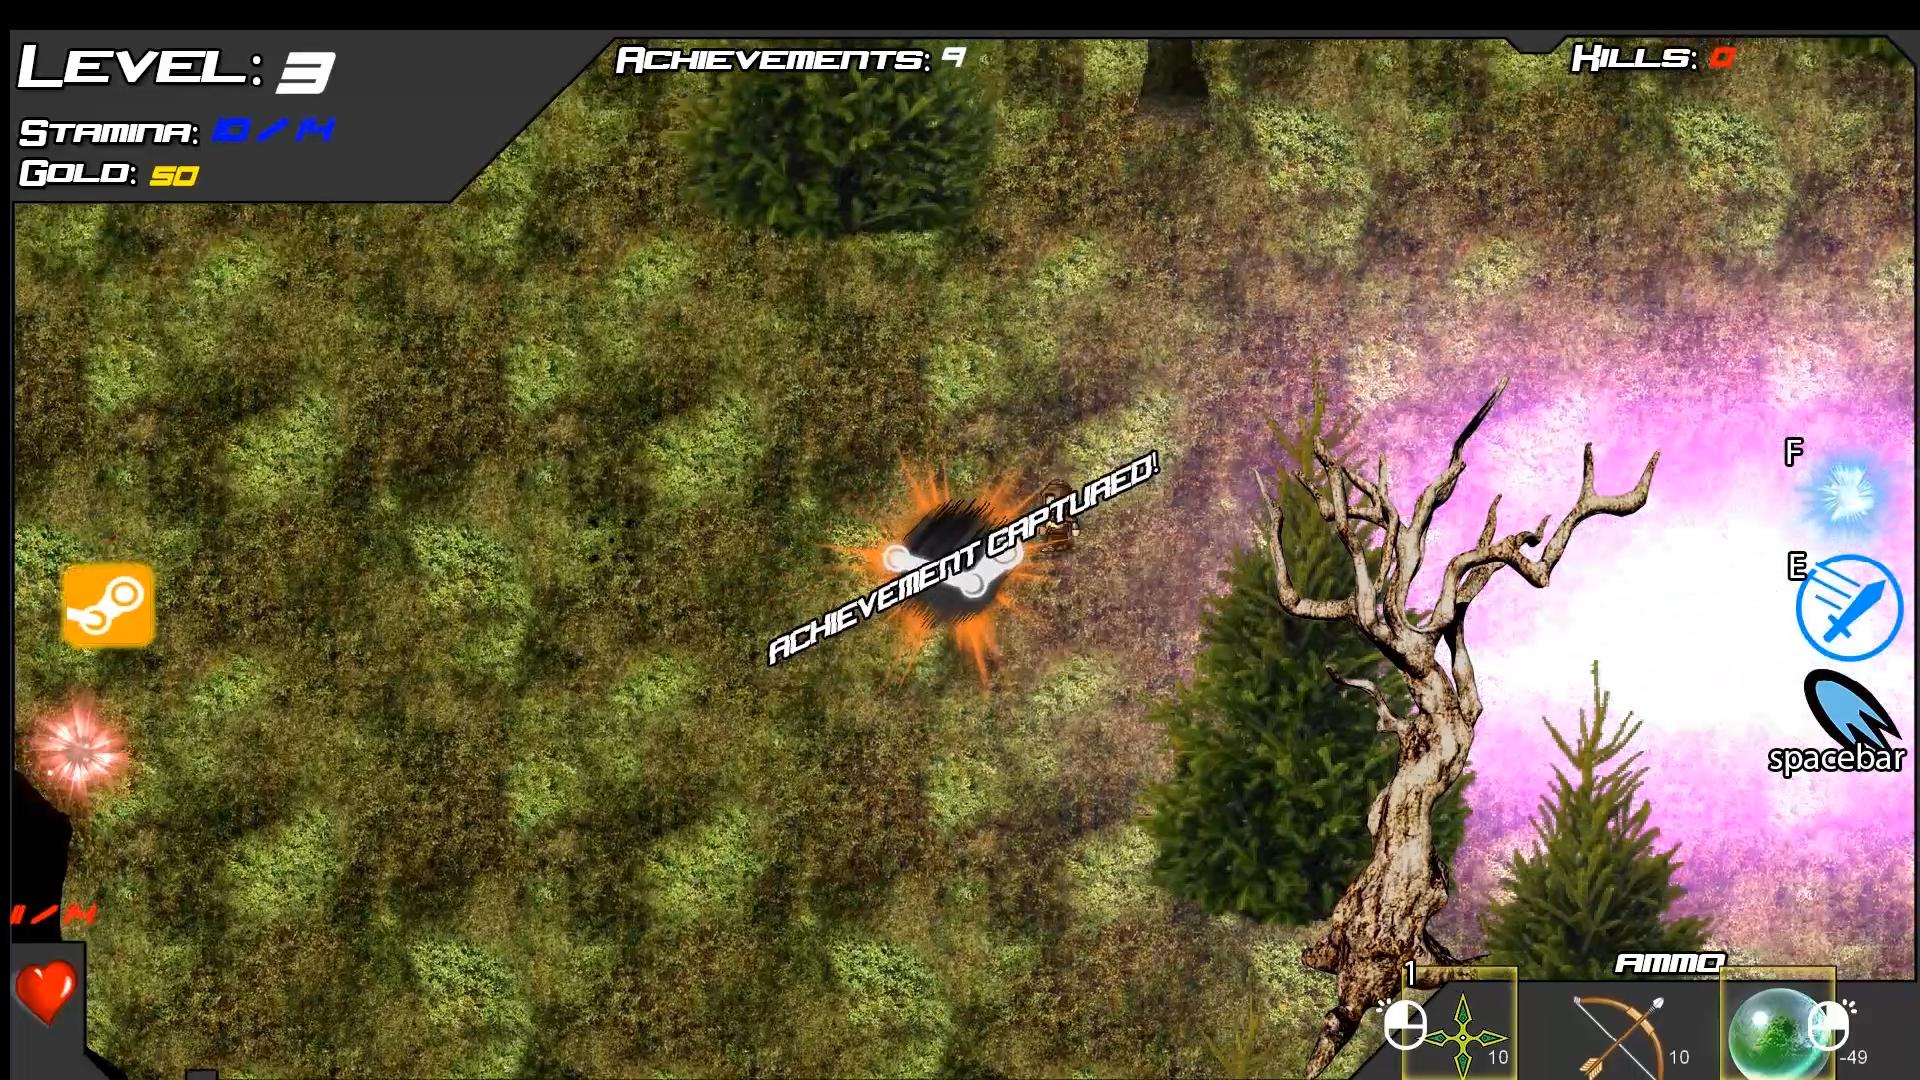 The Quest for Achievements II screenshot